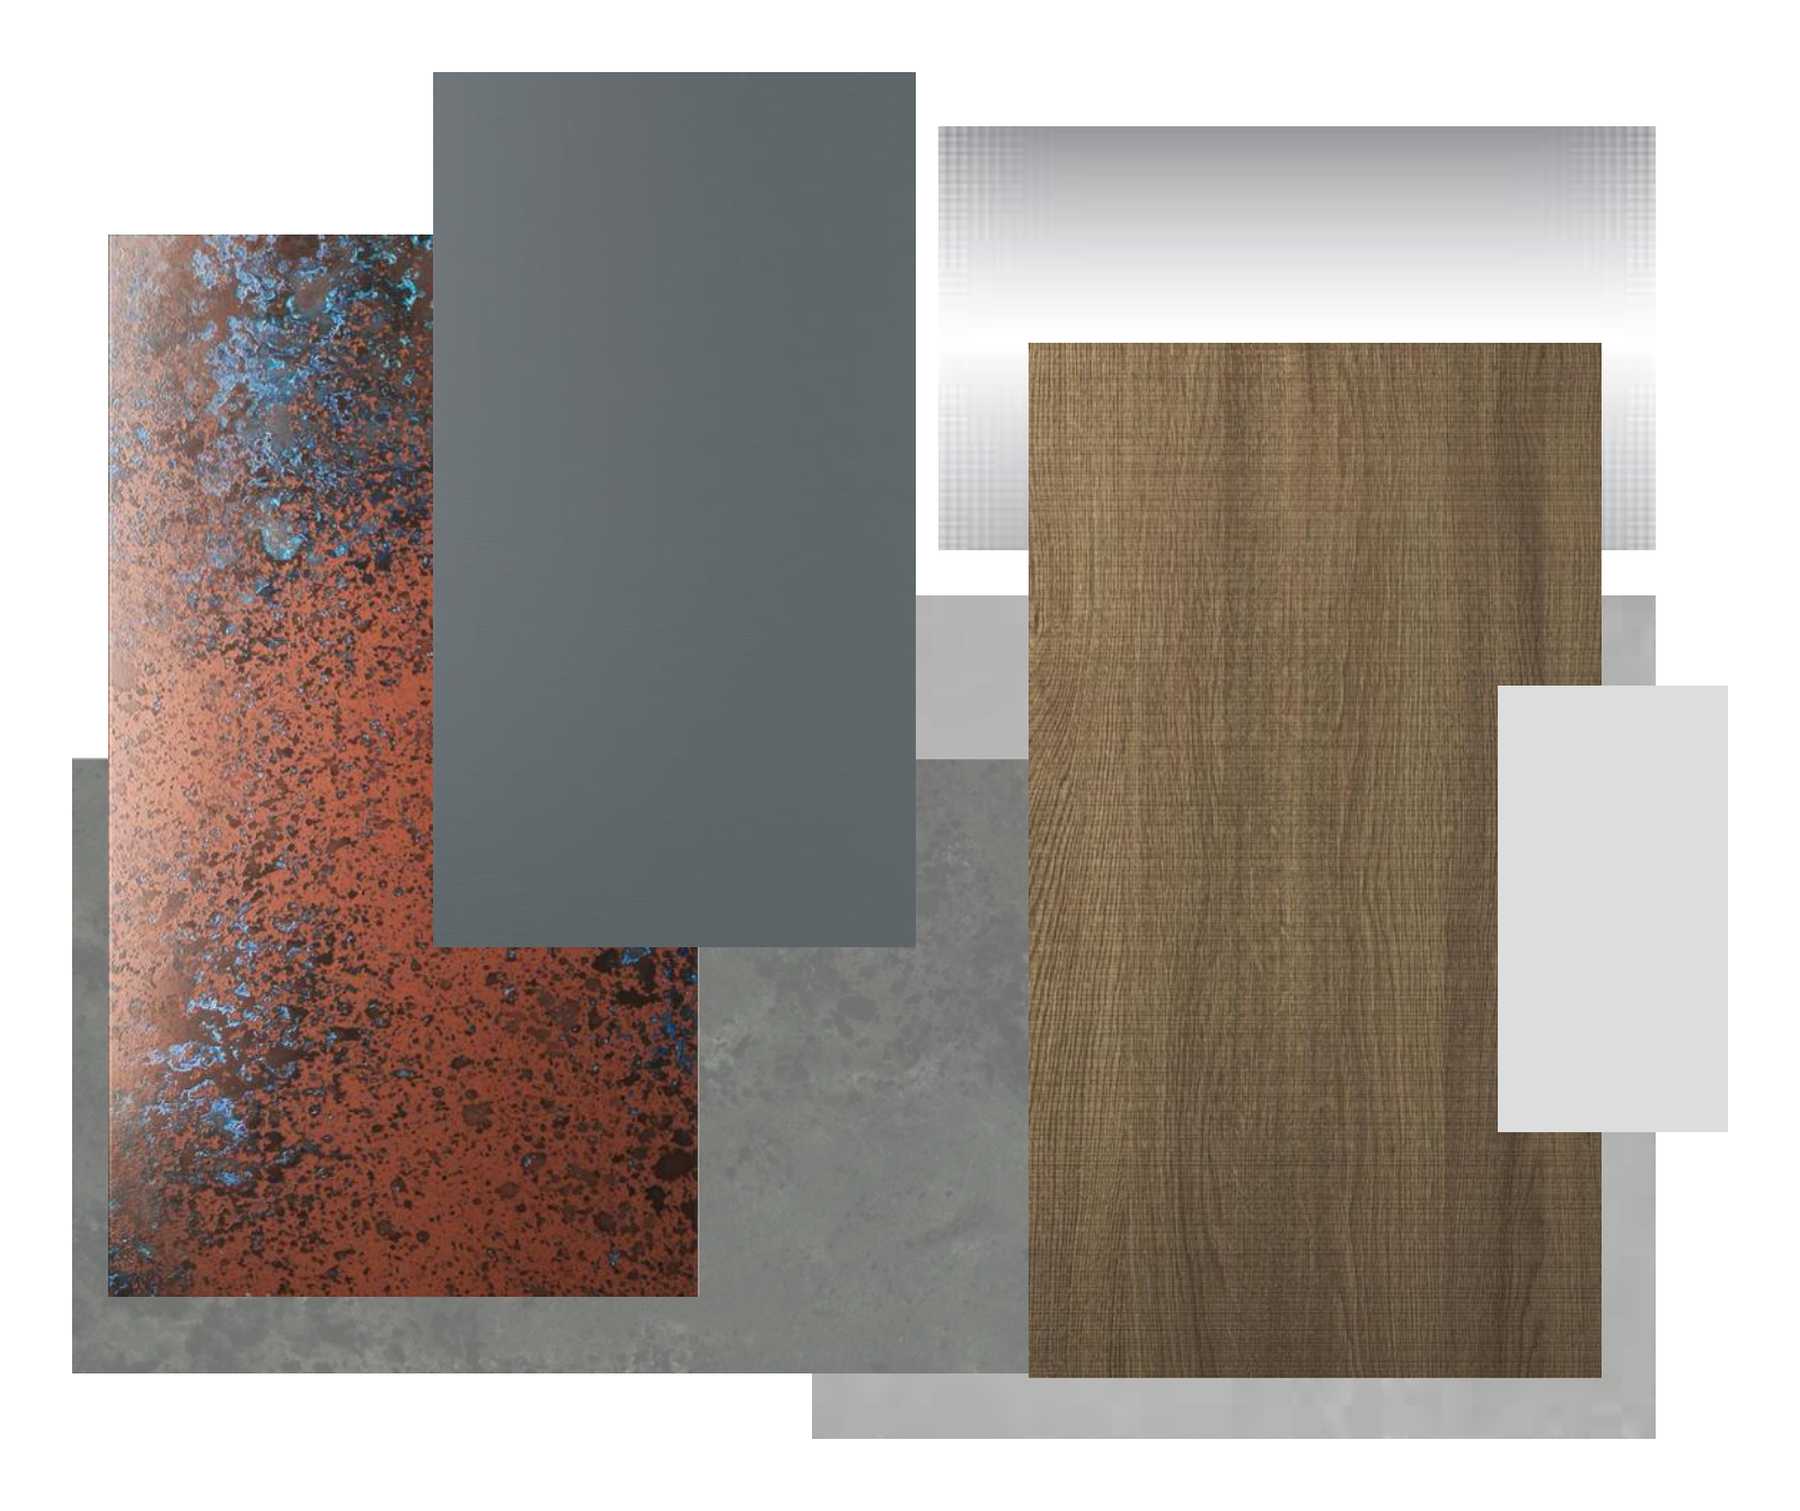 Oxidised copper and oak veneer moodboard